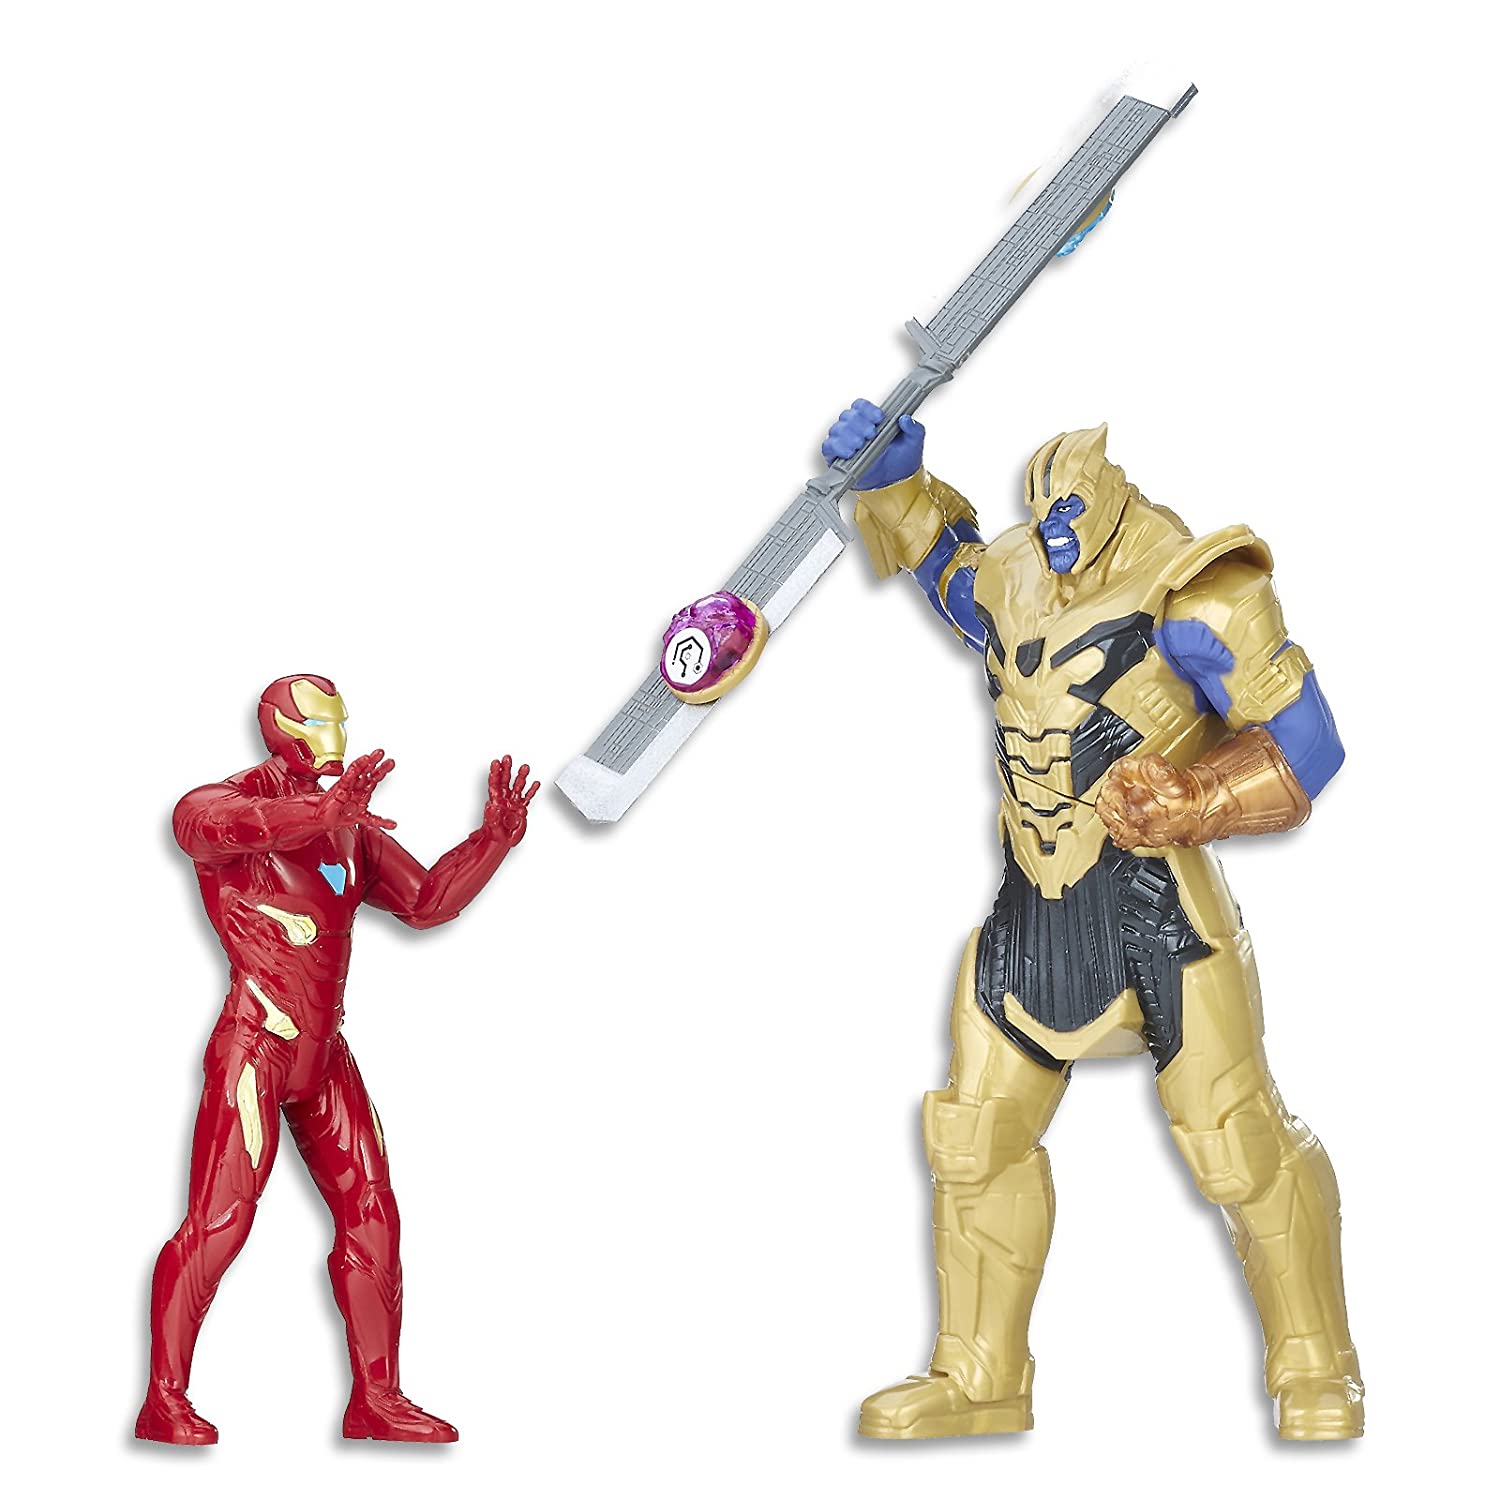 Marvel Avengers: Infinity War Iron Man vs. Thanos Battle Set